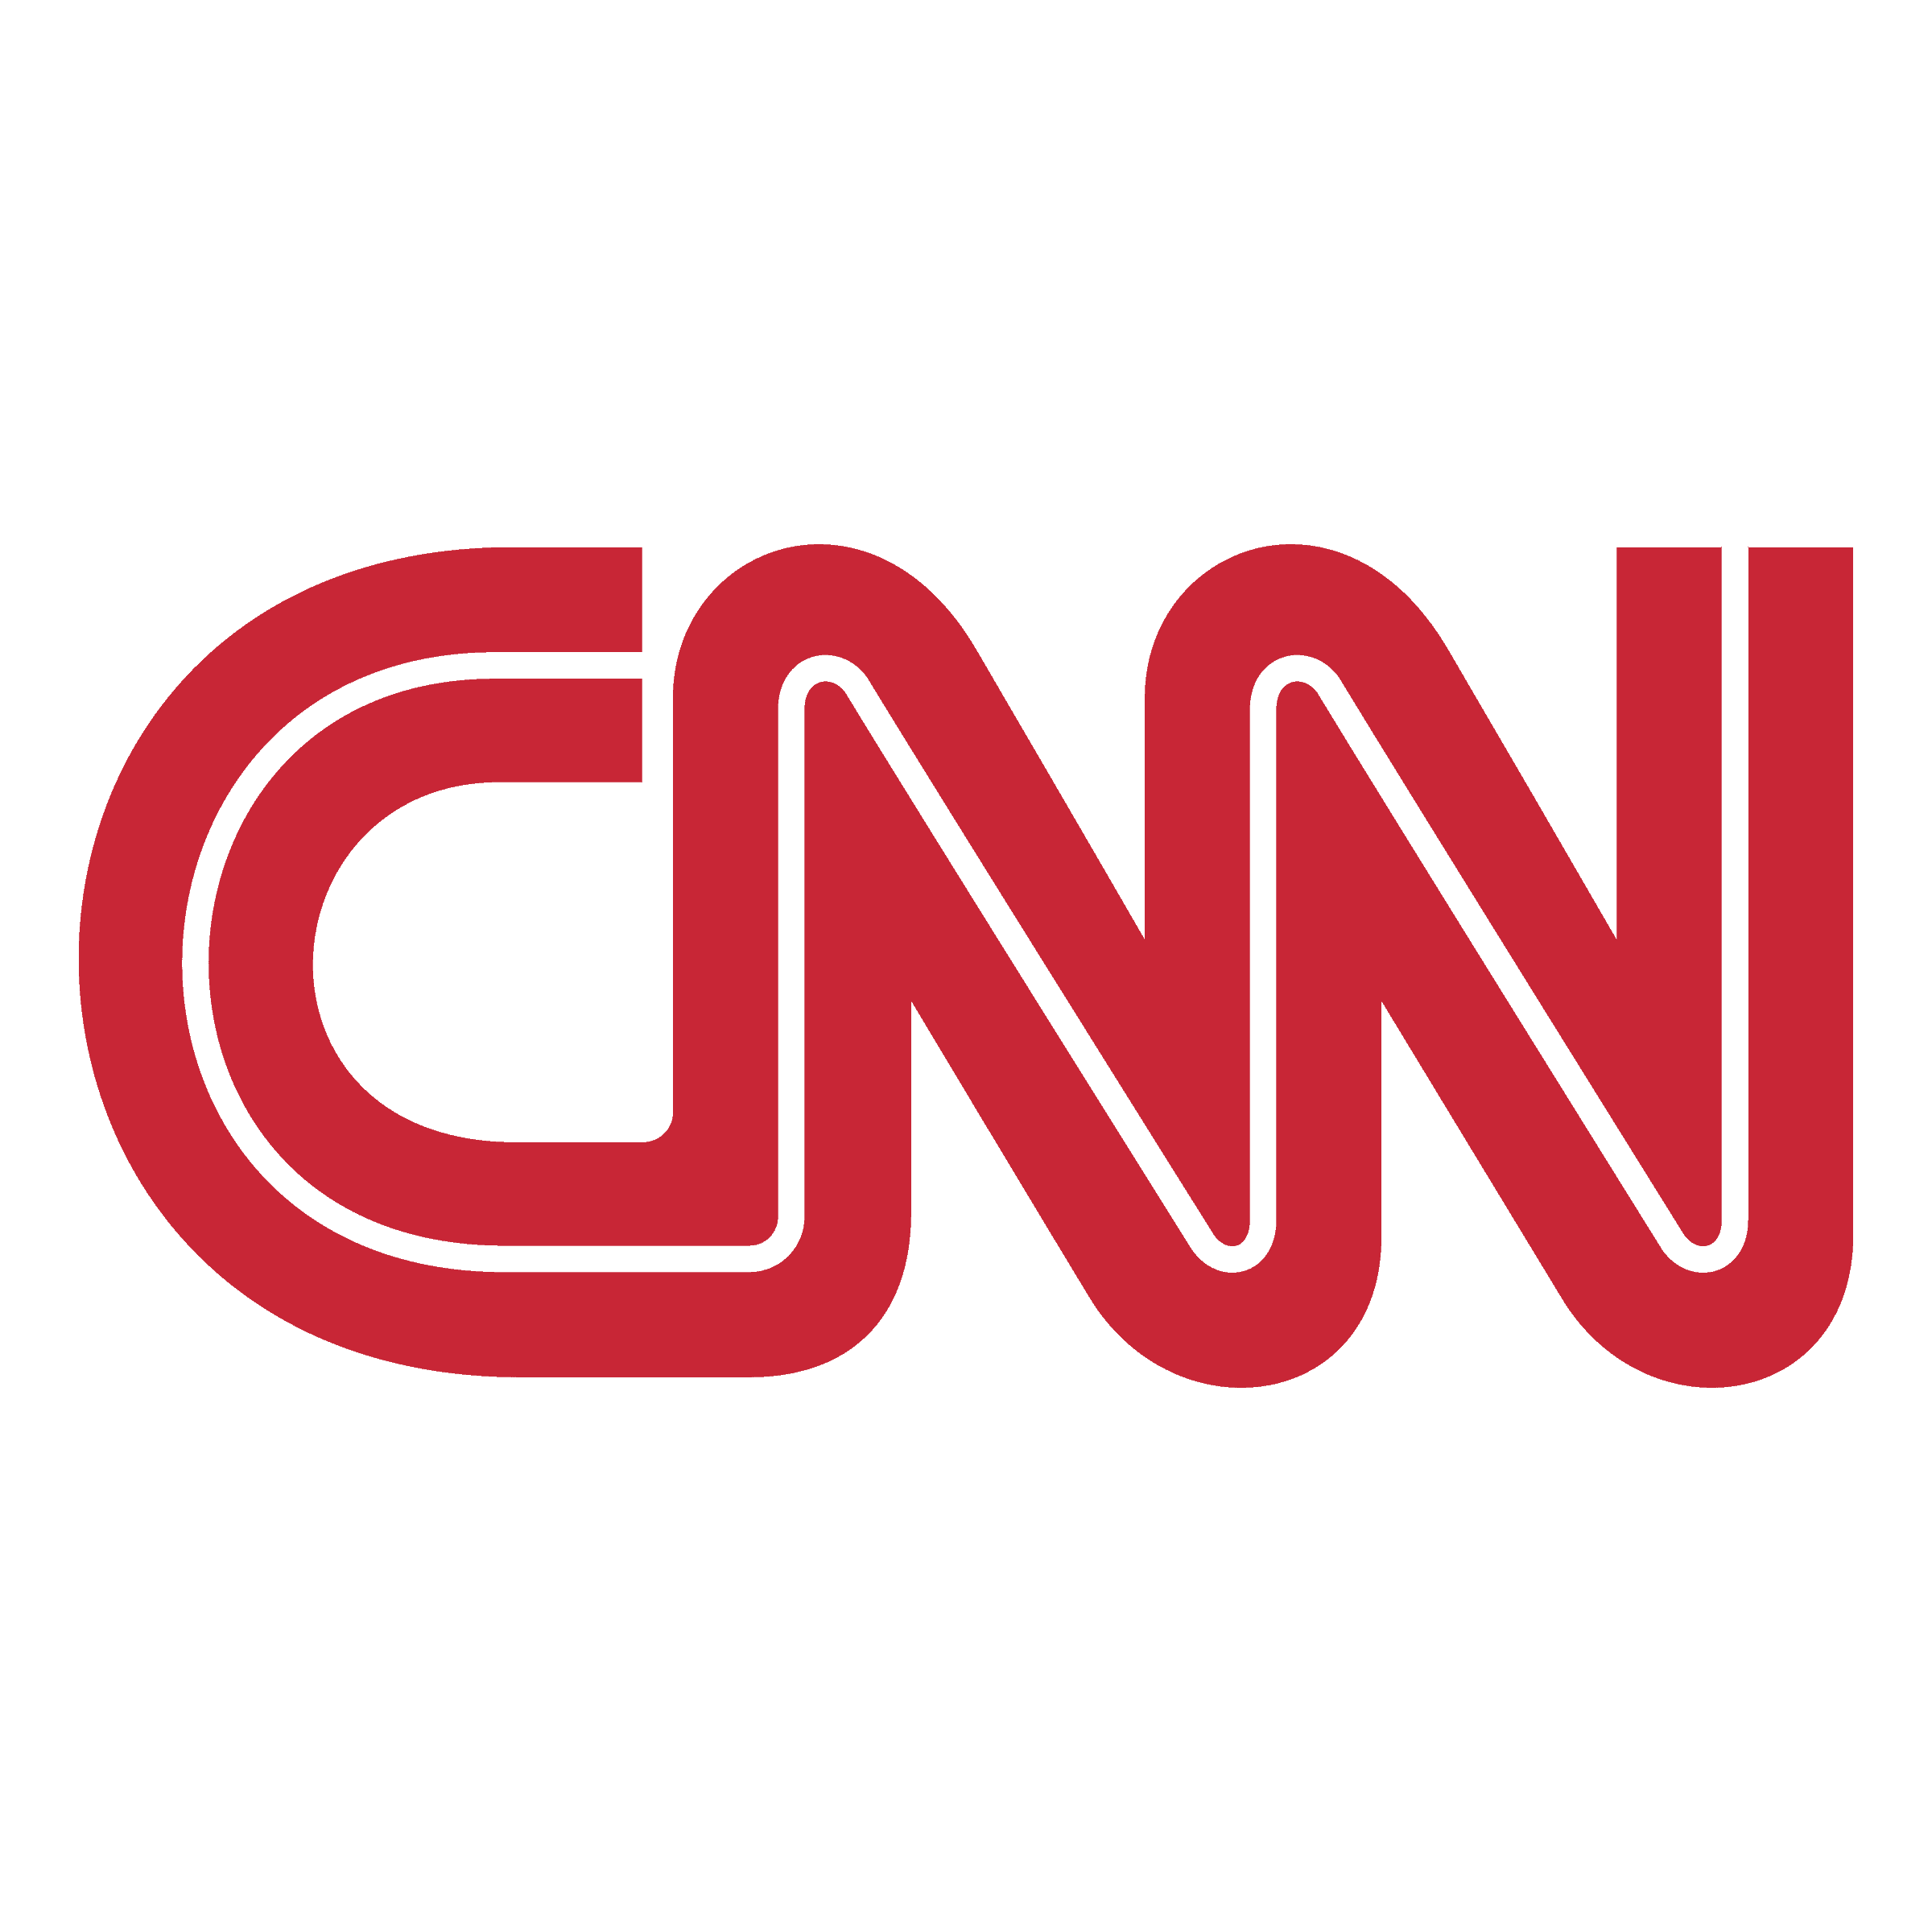 cnn 1 logo png transparent